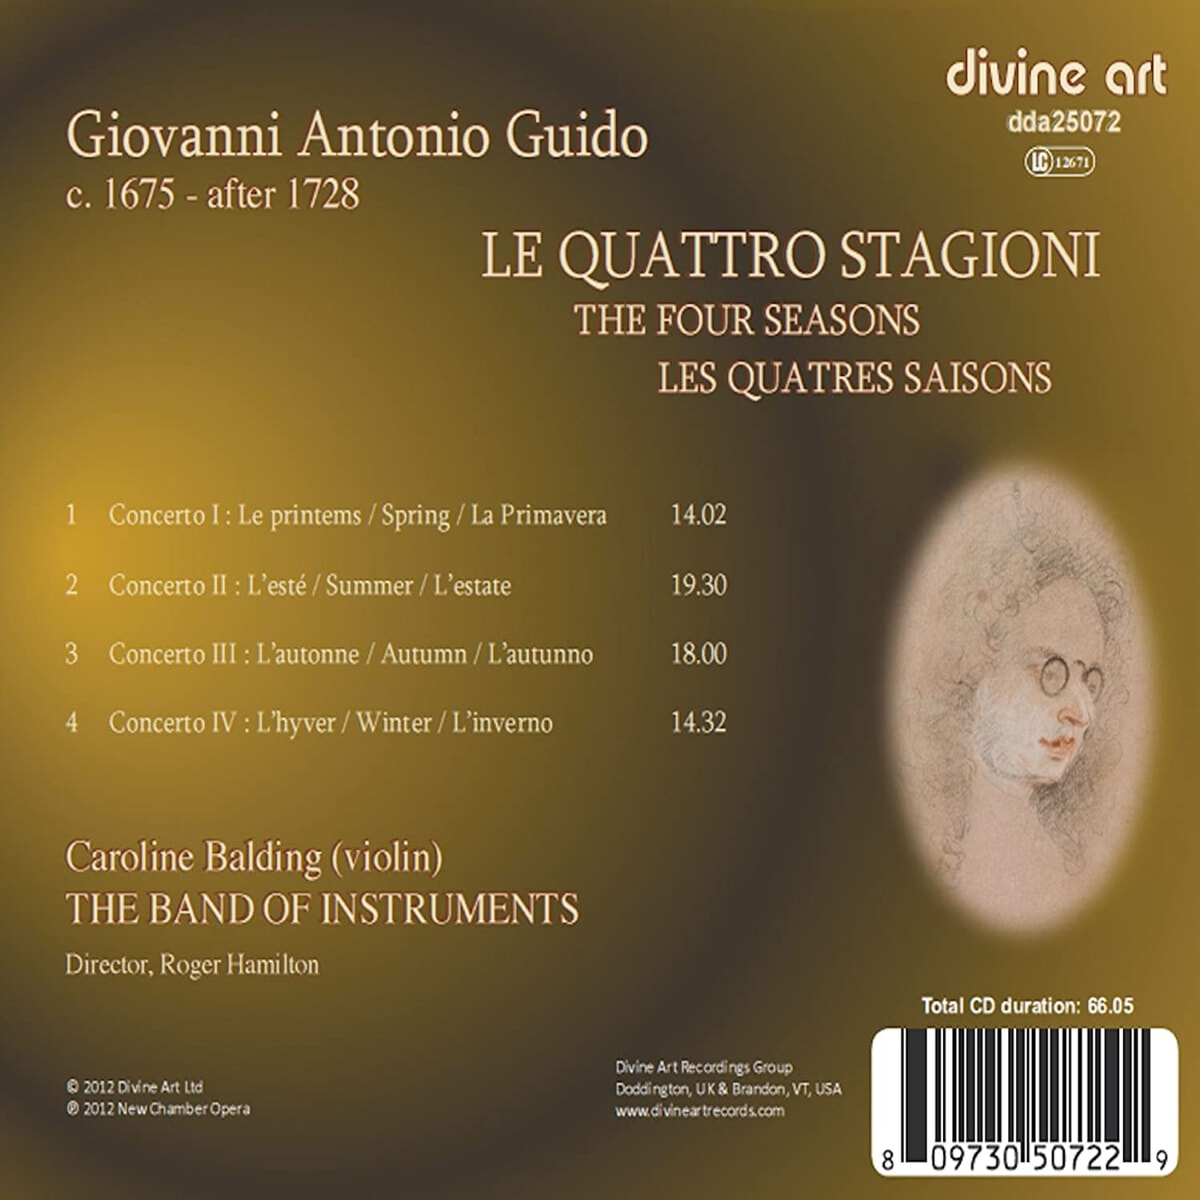 The Band of Instruments 조반니 안토니오 귀도: 실내악 ‘사계의 음악적 다양성’ (Guido: The Four Seasons)